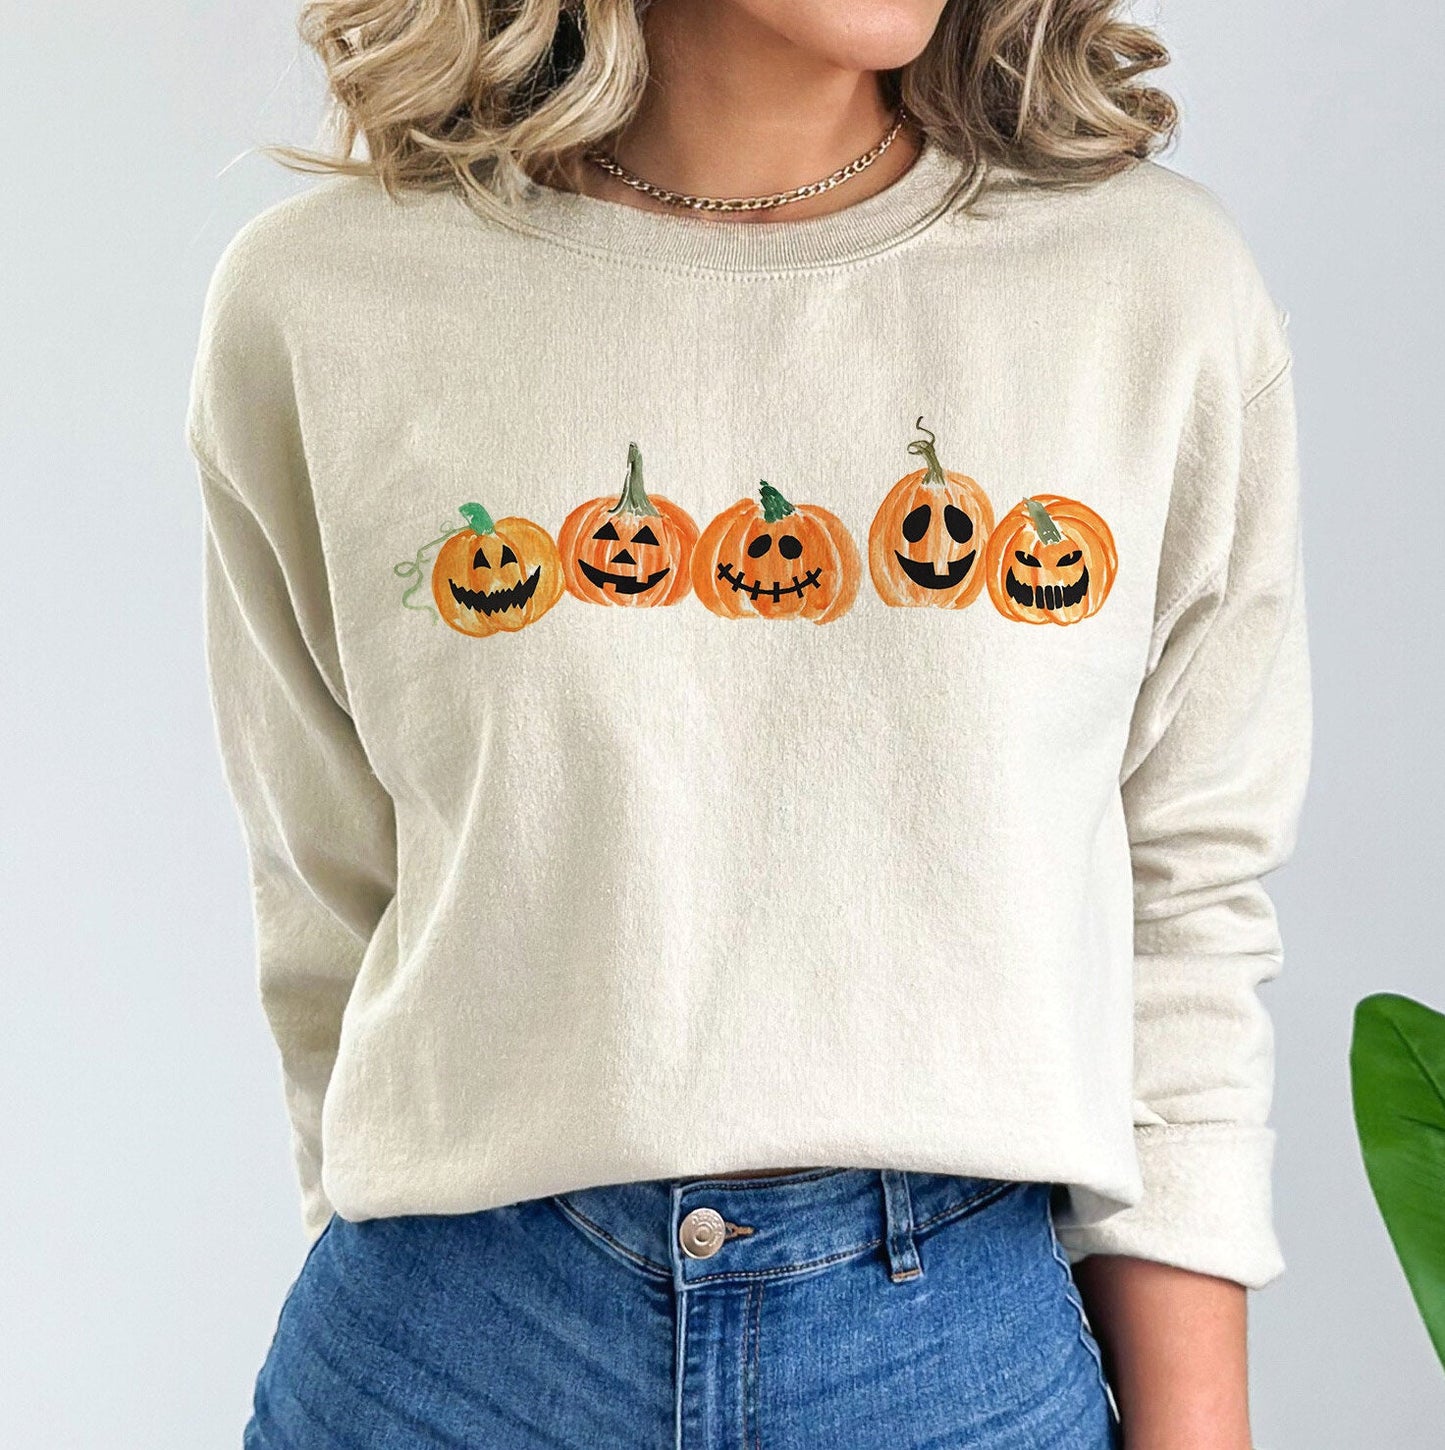 Five 5 Little Pumpkins Sitting On a Gate Ultra Cozy Retro Drop Shoulder Graphic Sweatshirt Unisex Soft Tee T-shirt for Women or Men